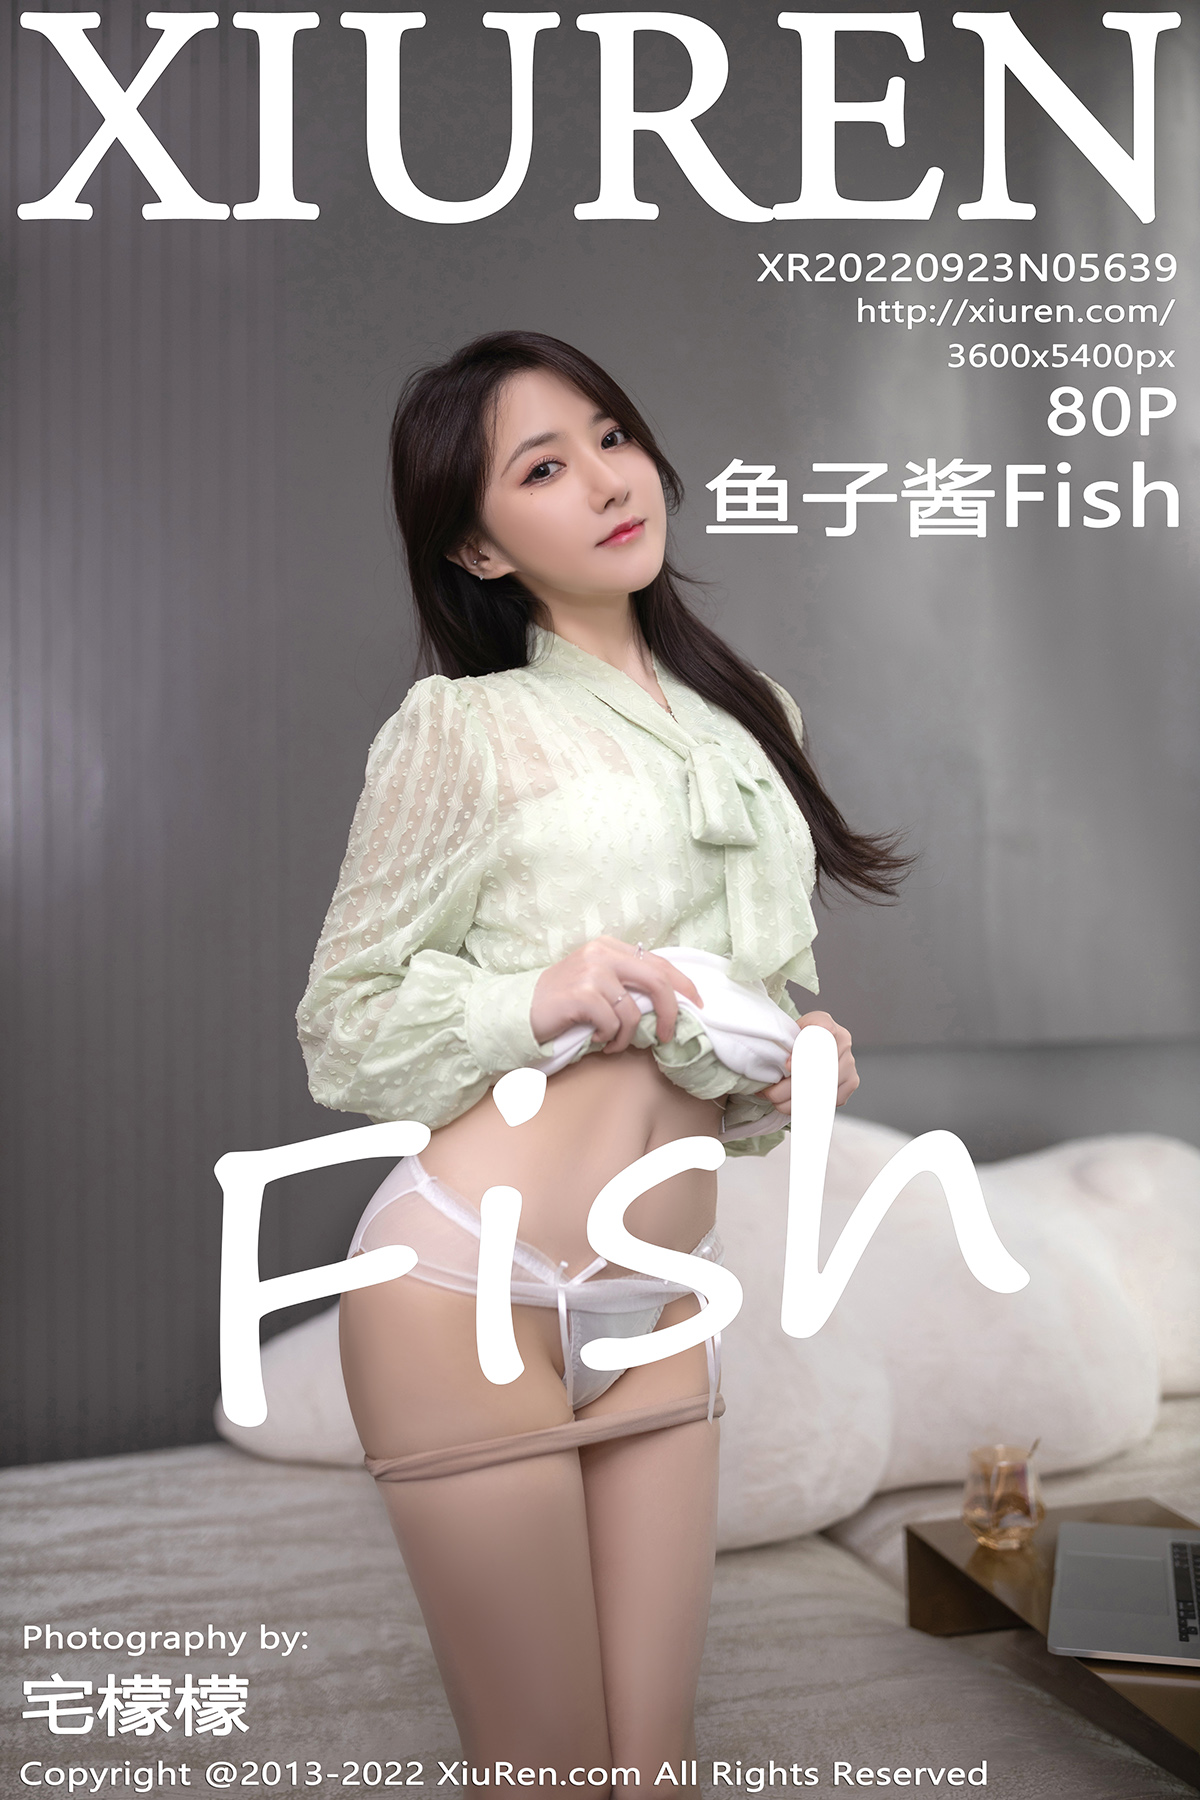 【XiuRen秀人网】2022.09.22 Vol.5639 魚子醬Fish【80P】-六色网